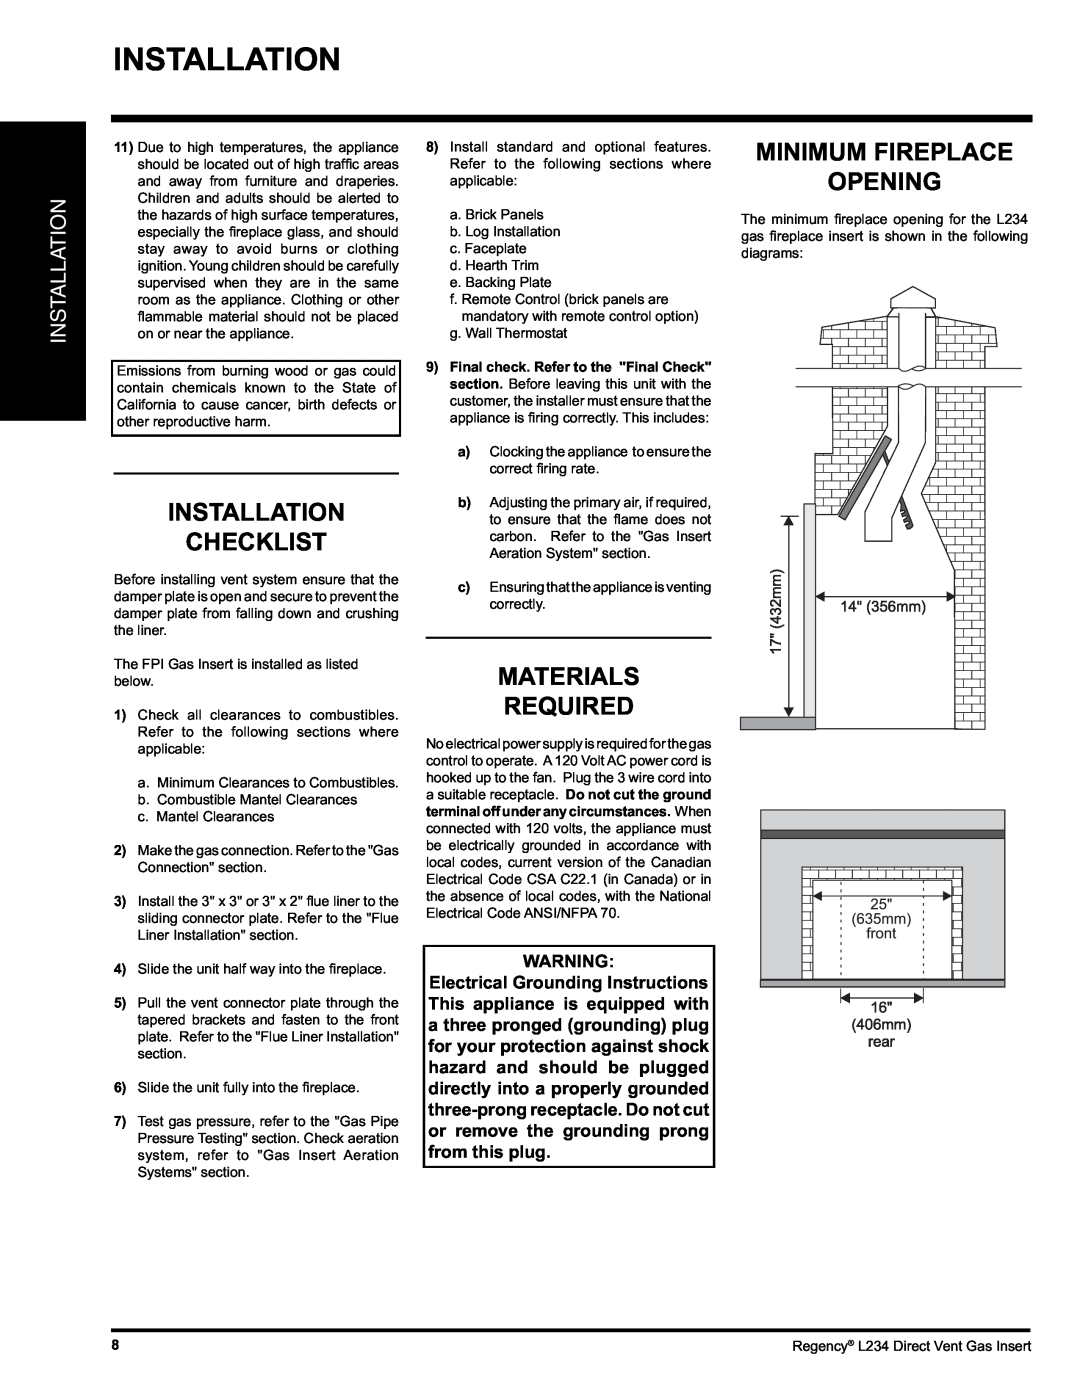 Regency L234-LP, L234-NG installation manual Installation Checklist, Materials Required, Minimum Fireplace Opening 